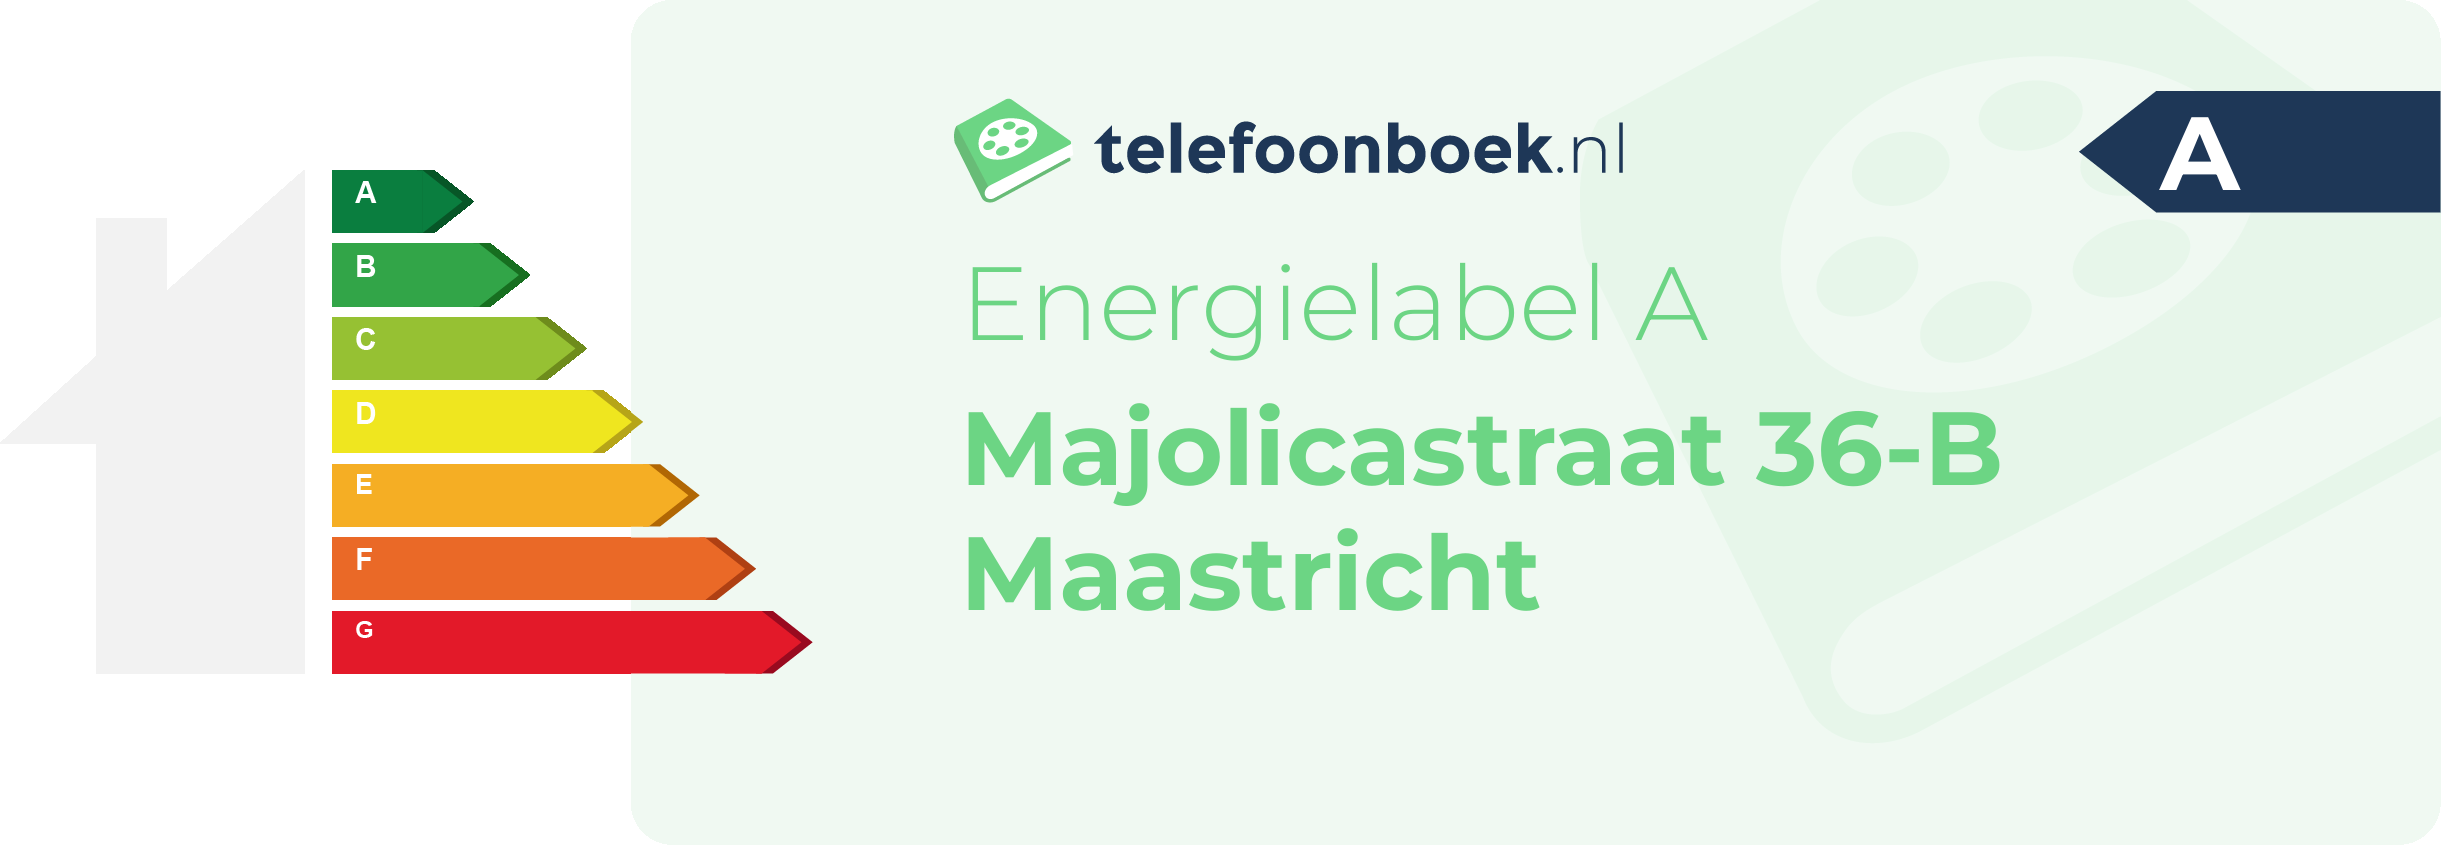 Energielabel Majolicastraat 36-B Maastricht